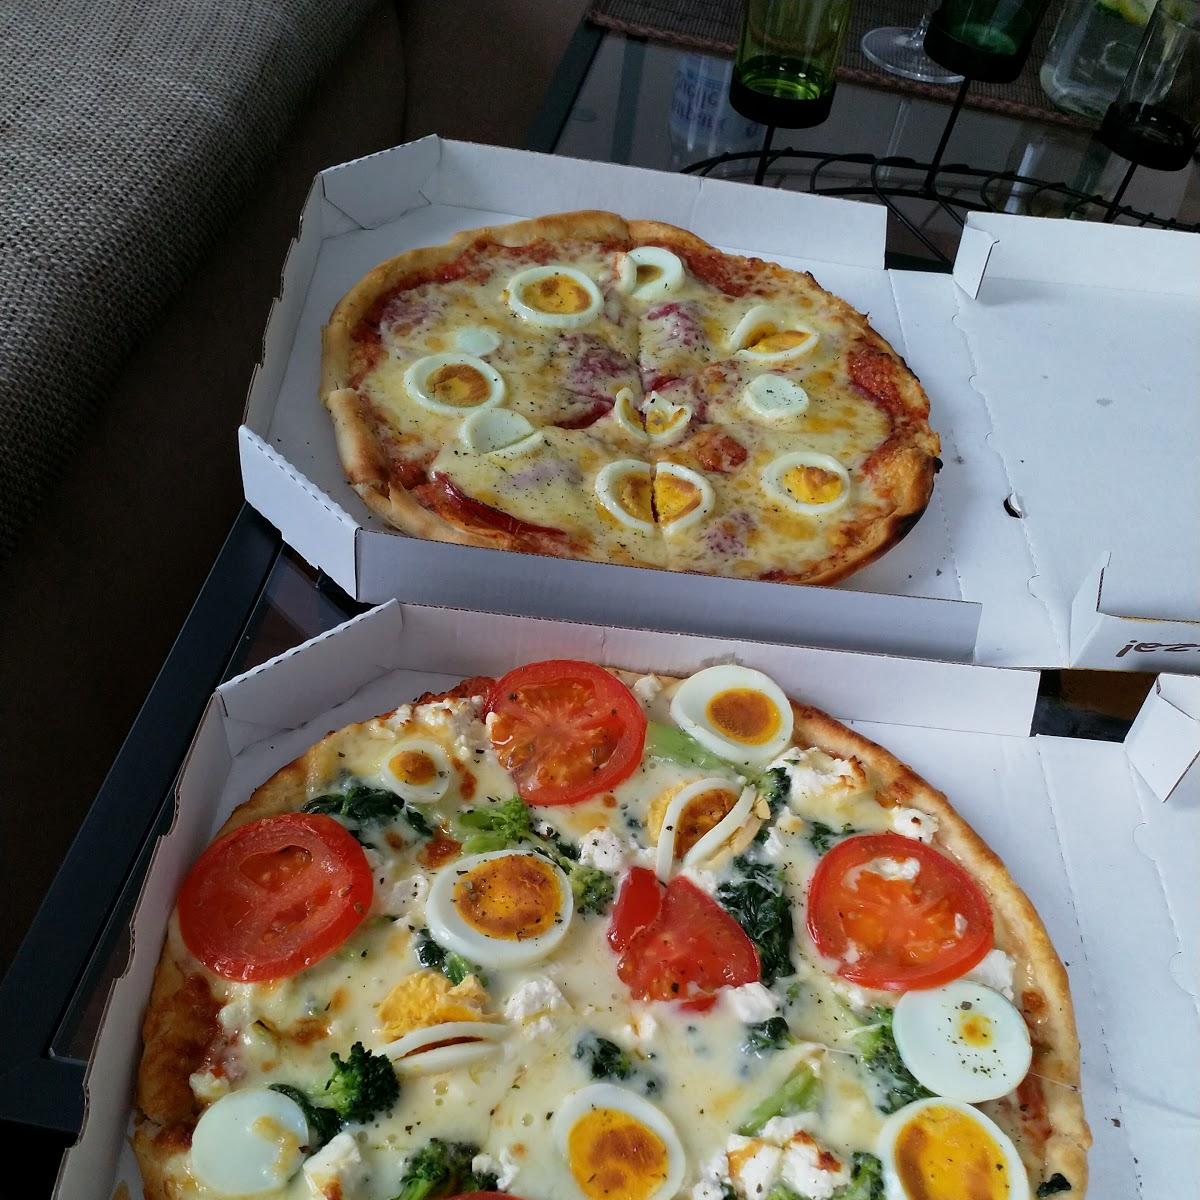 Restaurant "Jet Pizza Service" in Göppingen